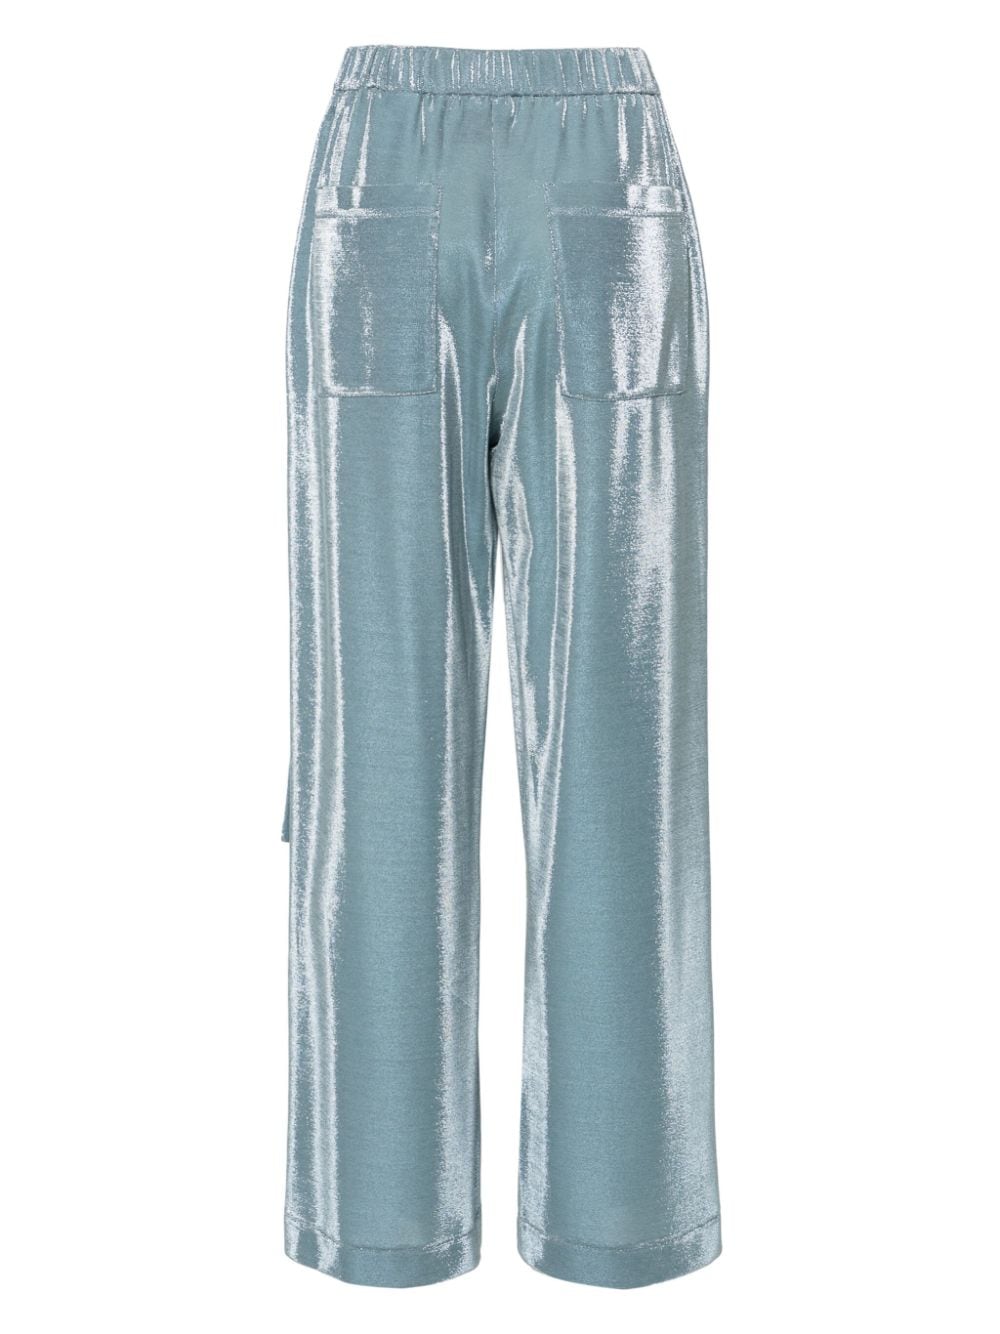 Pantaloni donna blu metallico